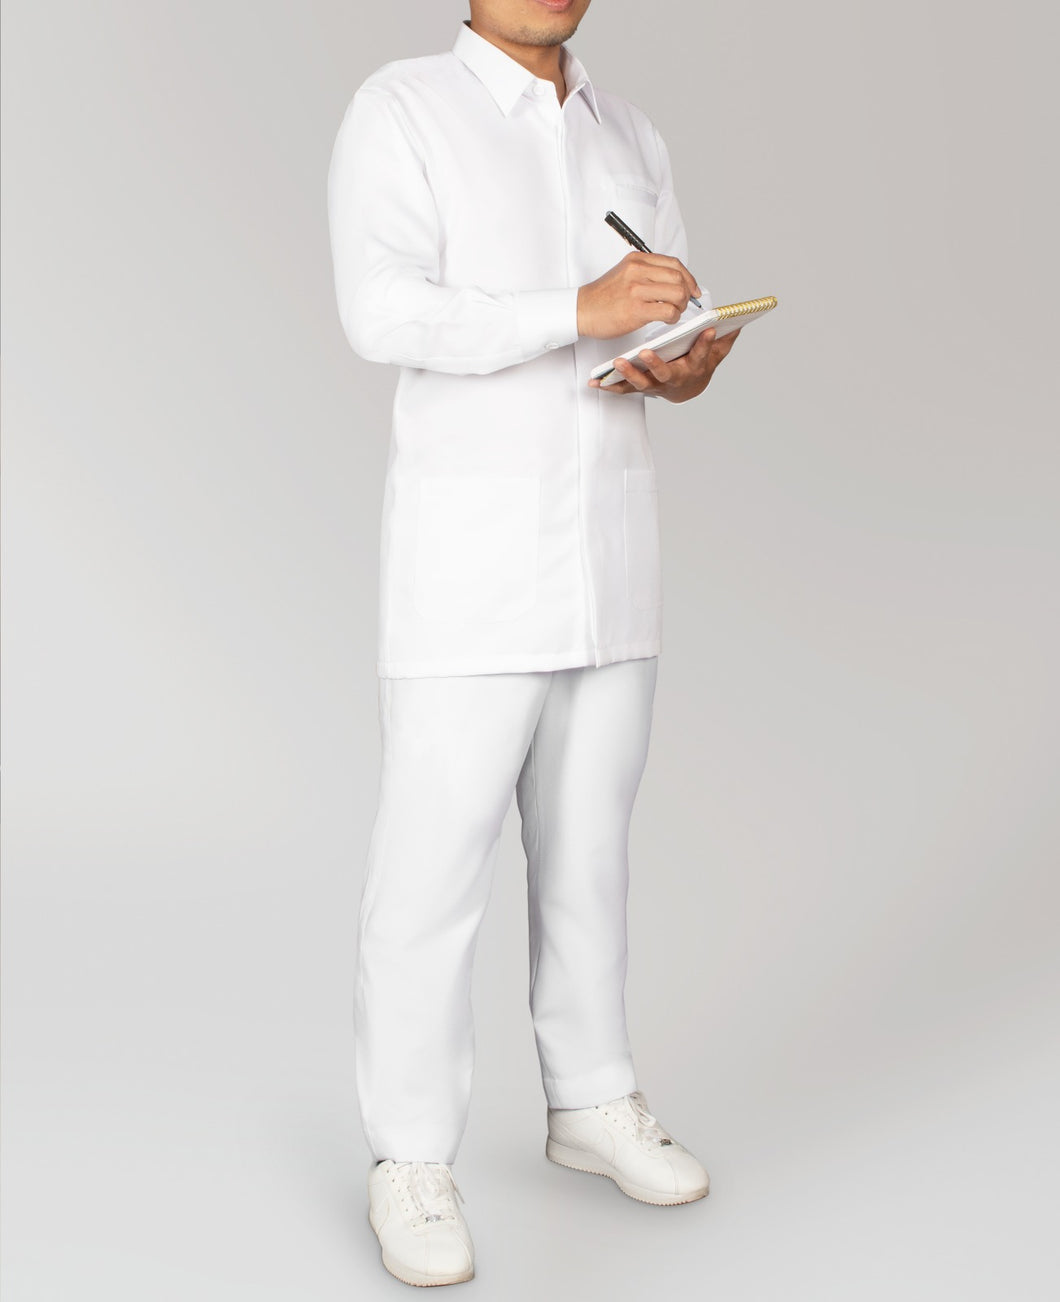 Men Nurse Uniform in Minimatt